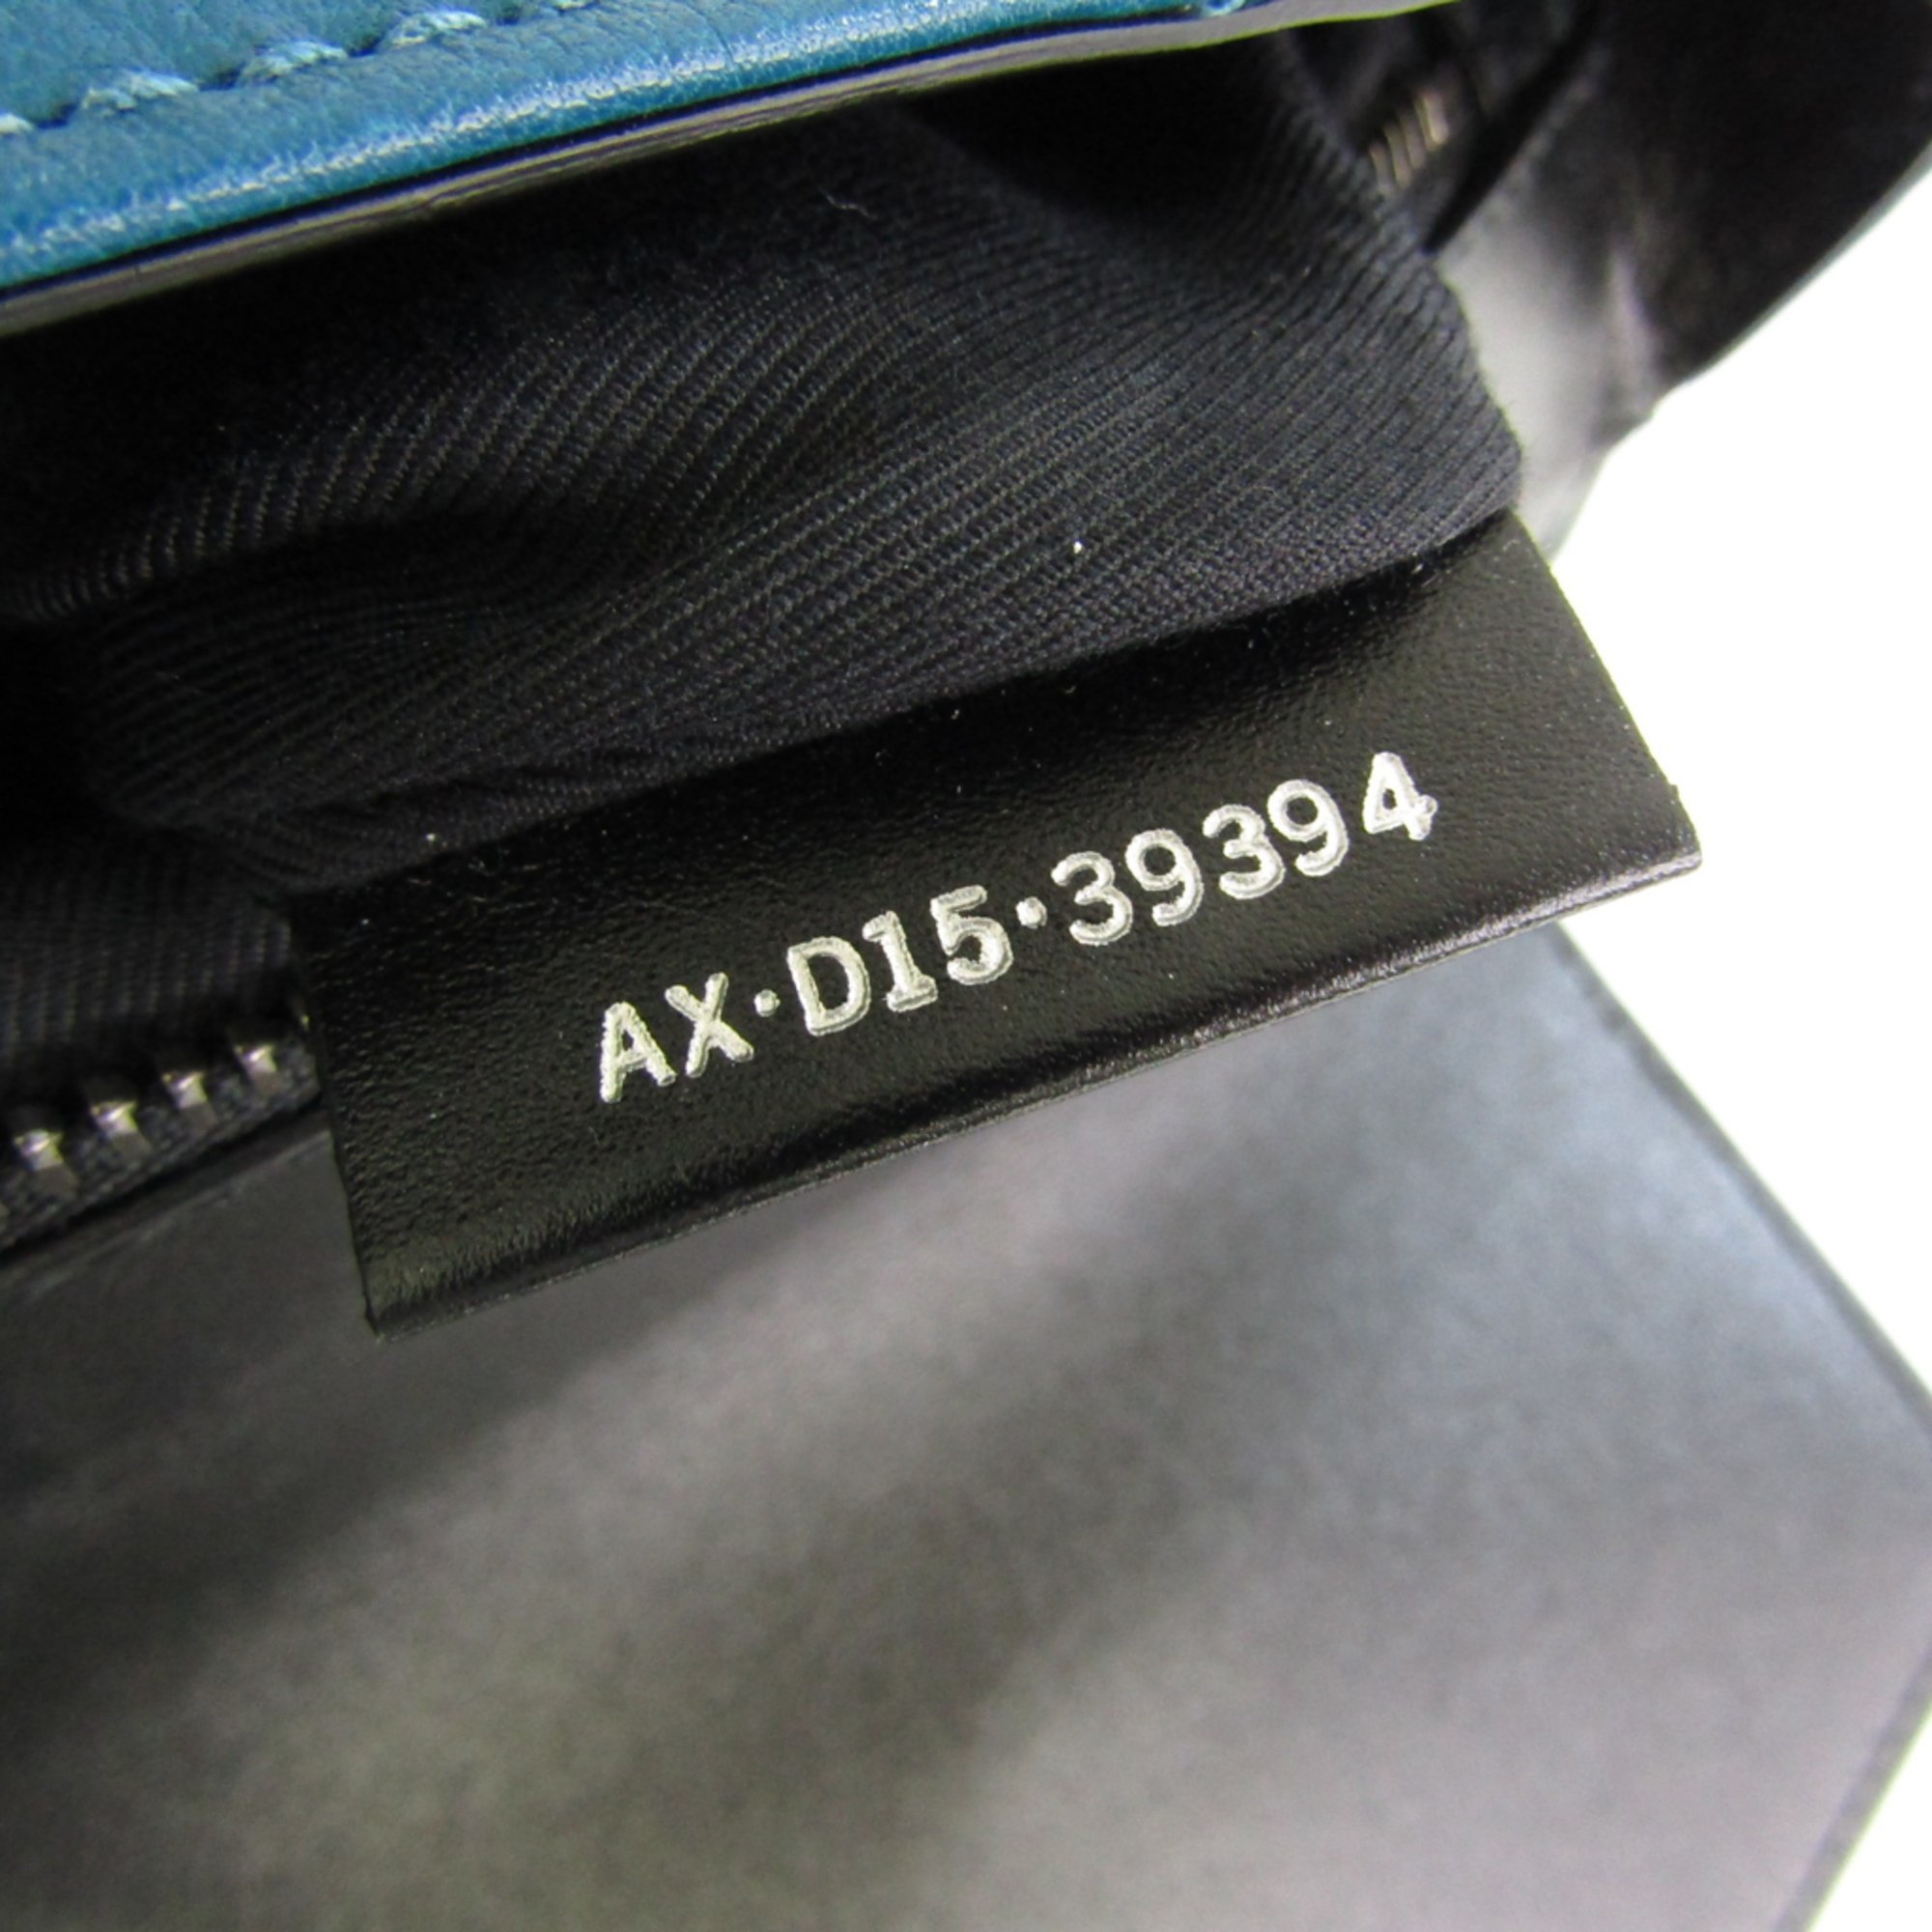 Bvlgari 39394 Women's Leather Handbag,Shoulder Bag Blue